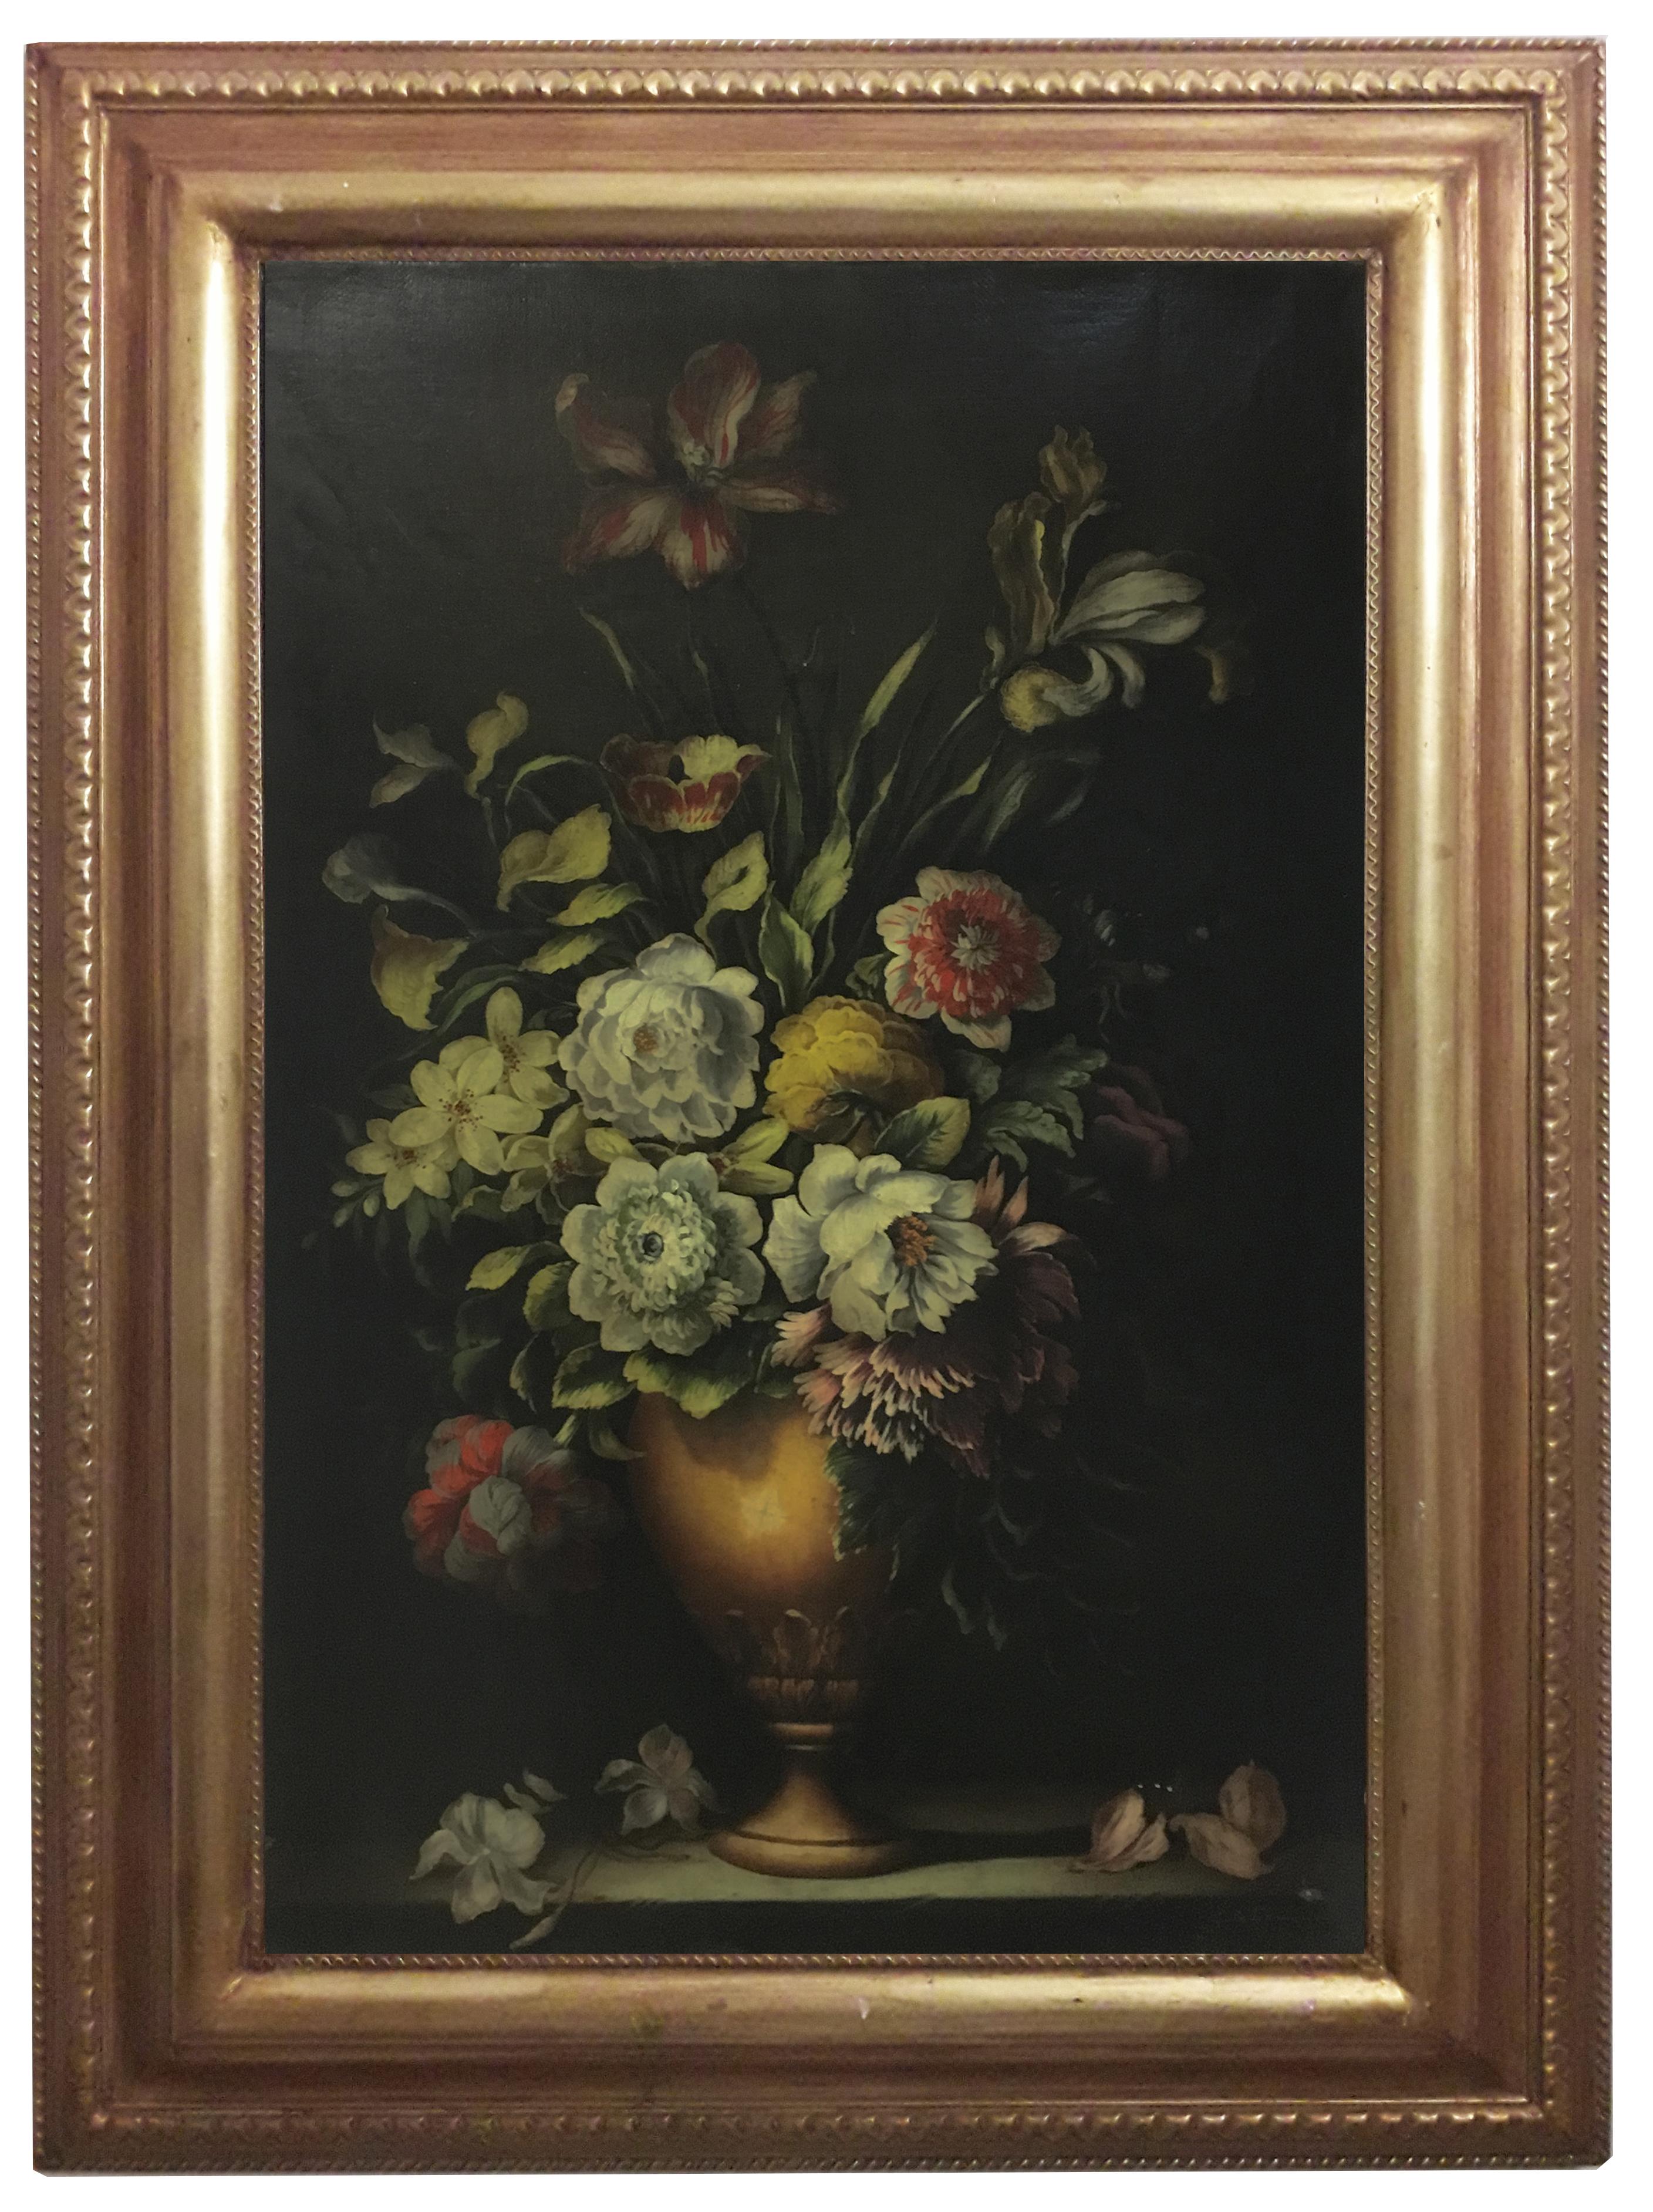 FLOWERS - Dutch School -Italian Still Life Oil on Canvas Painting